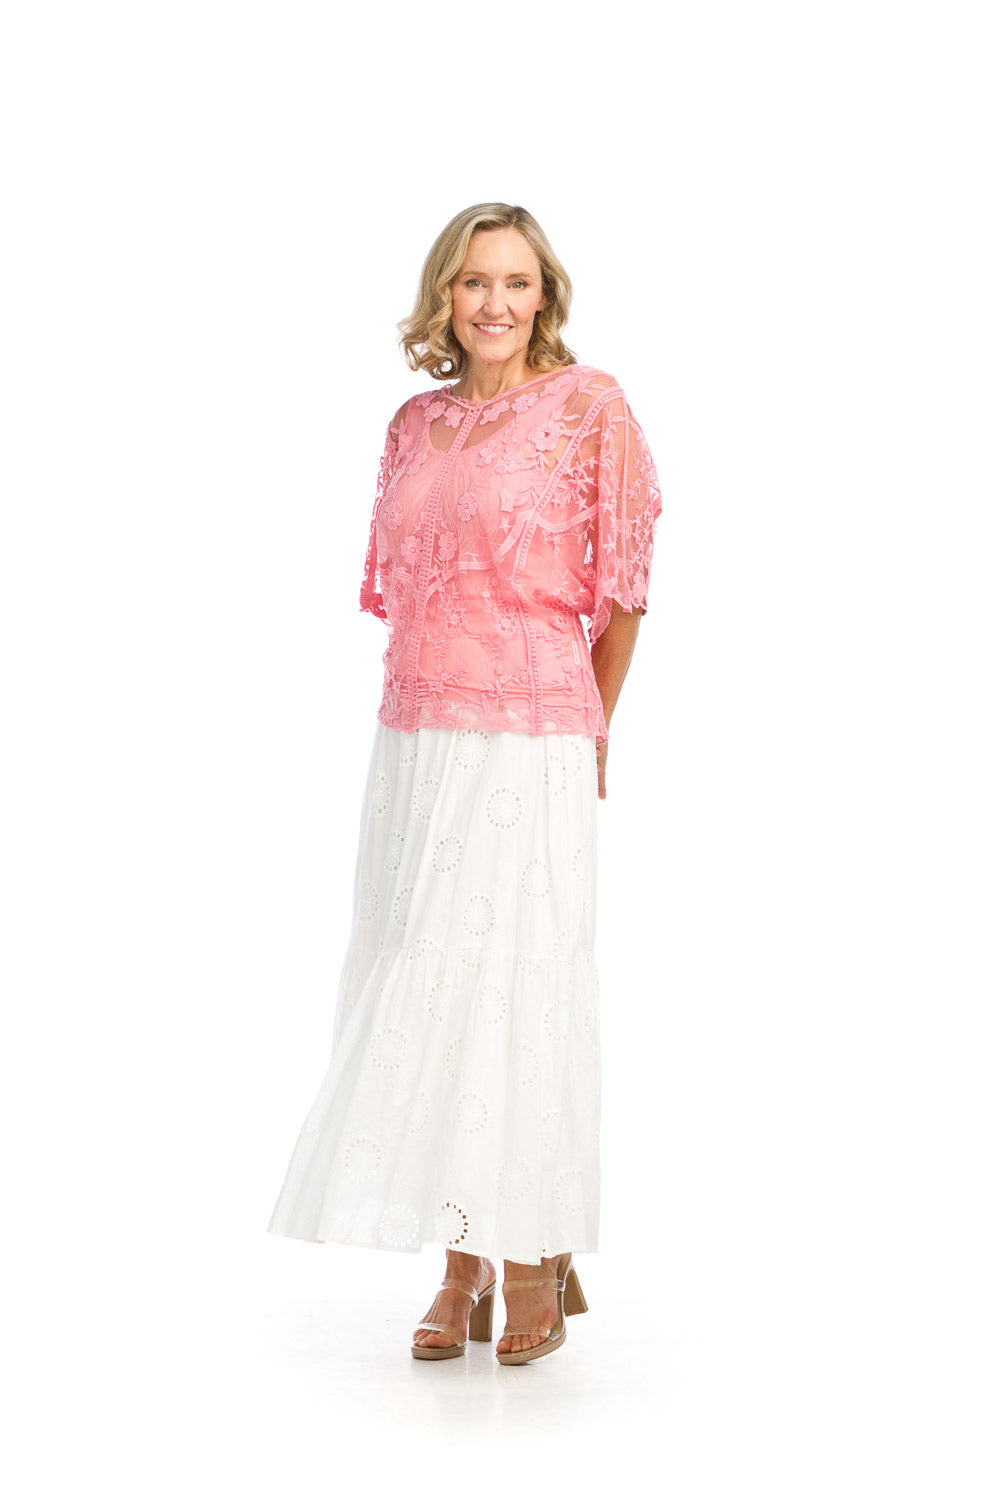 PS16904 WHITE Cotton Eyelet Skirt with Elastic Waistband